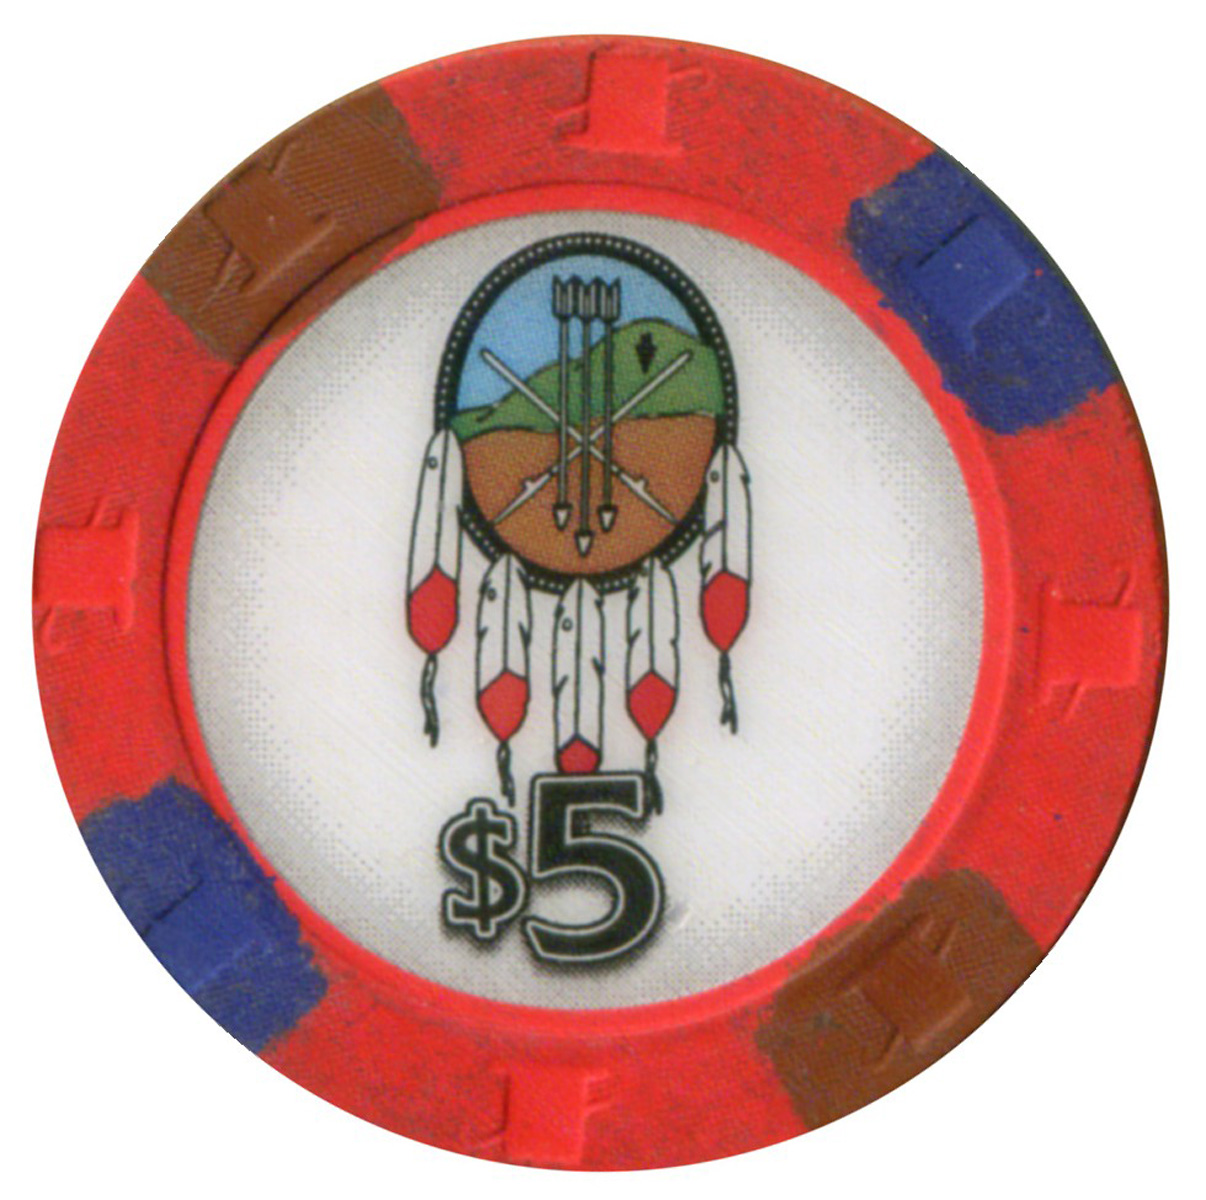 san manuel indian bingo casino age limit